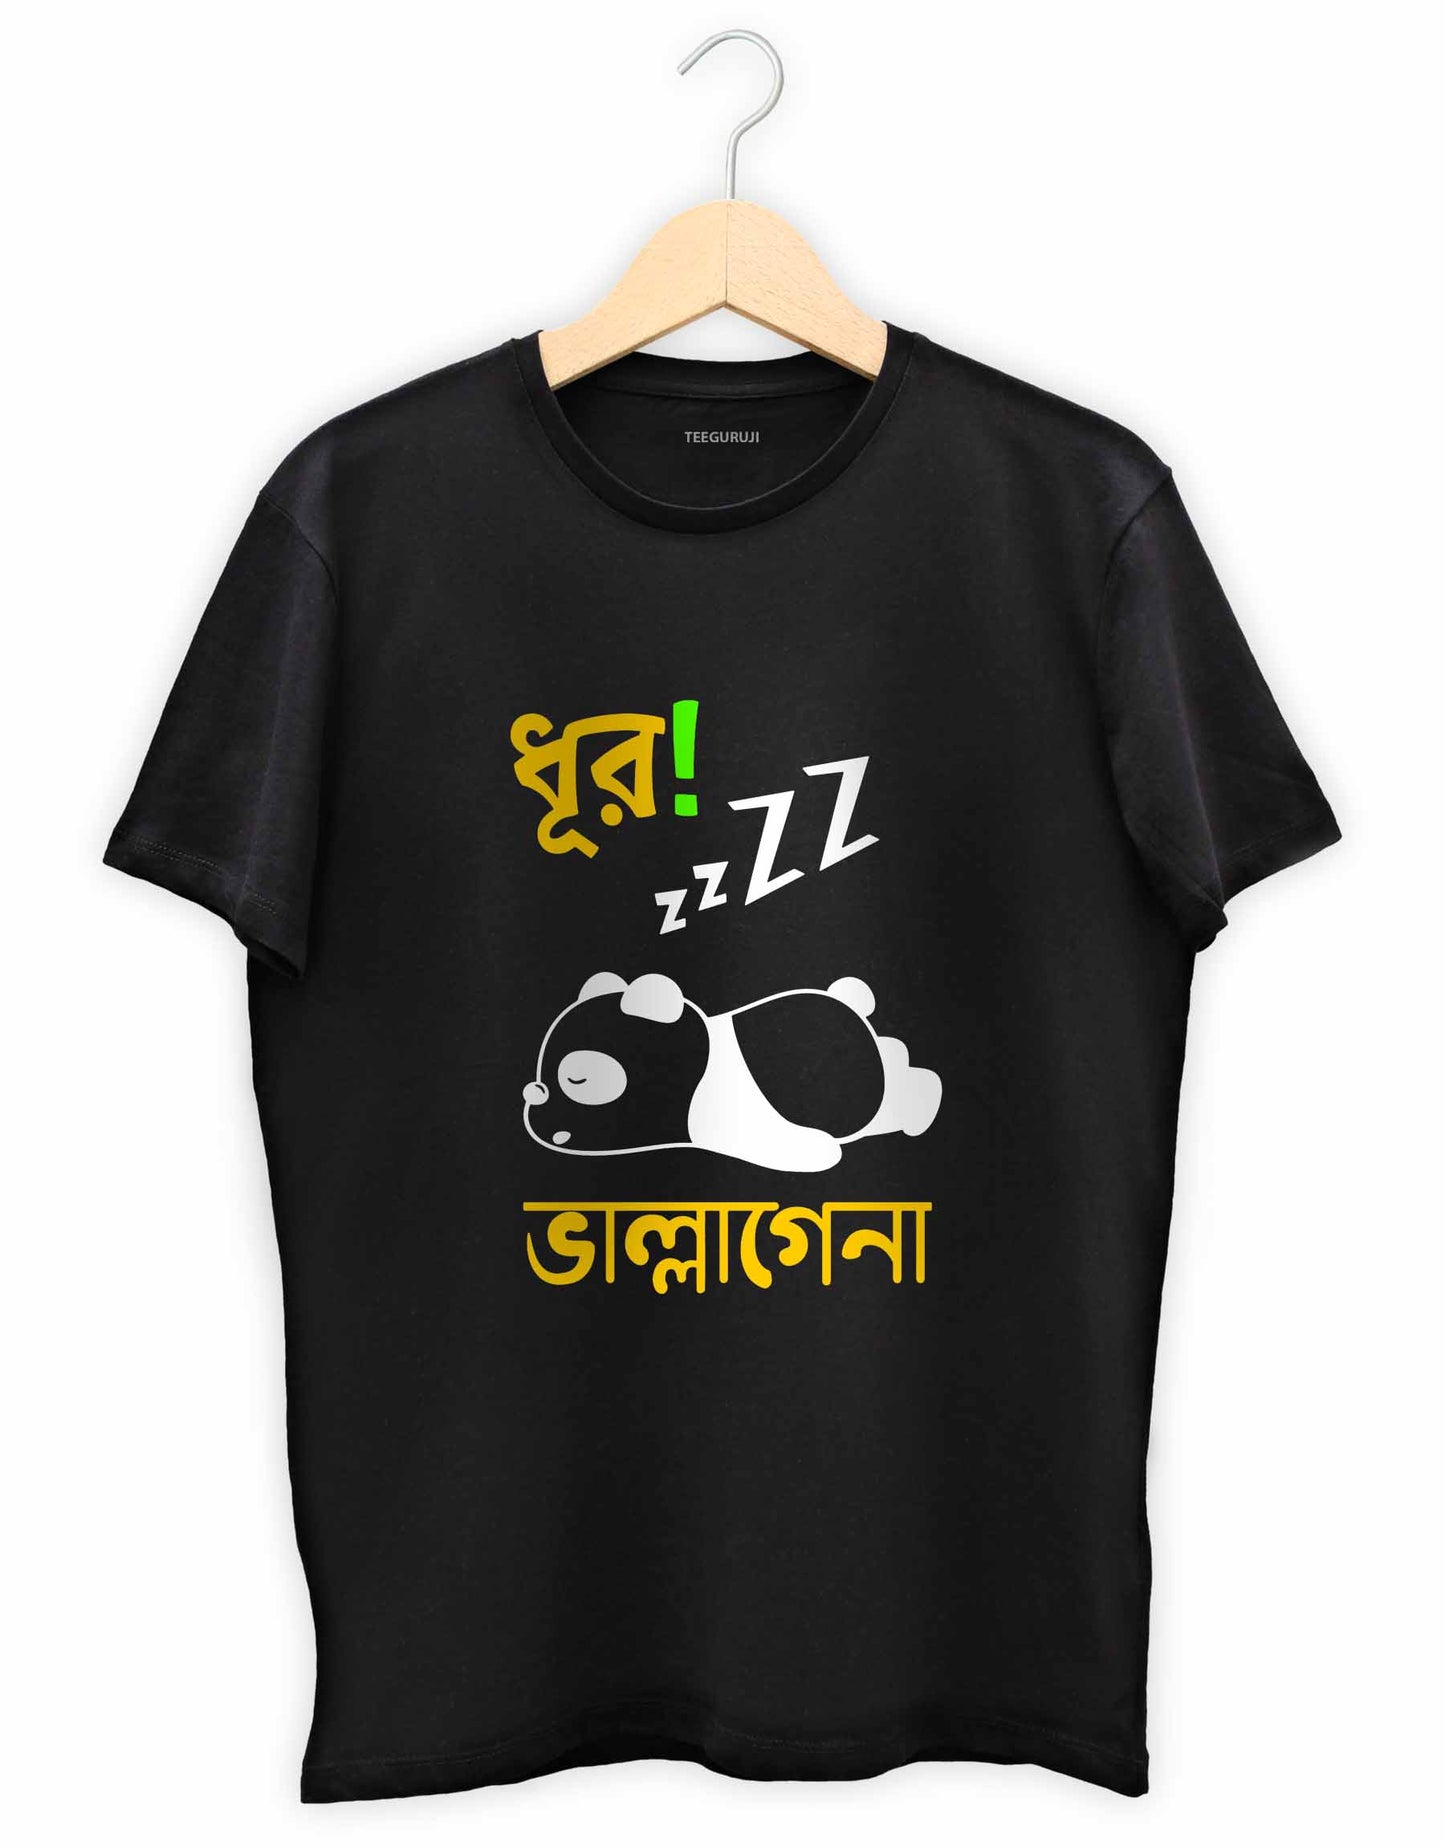 Dhur Vallagena Bengali T-Shirt | TEEGURUJI